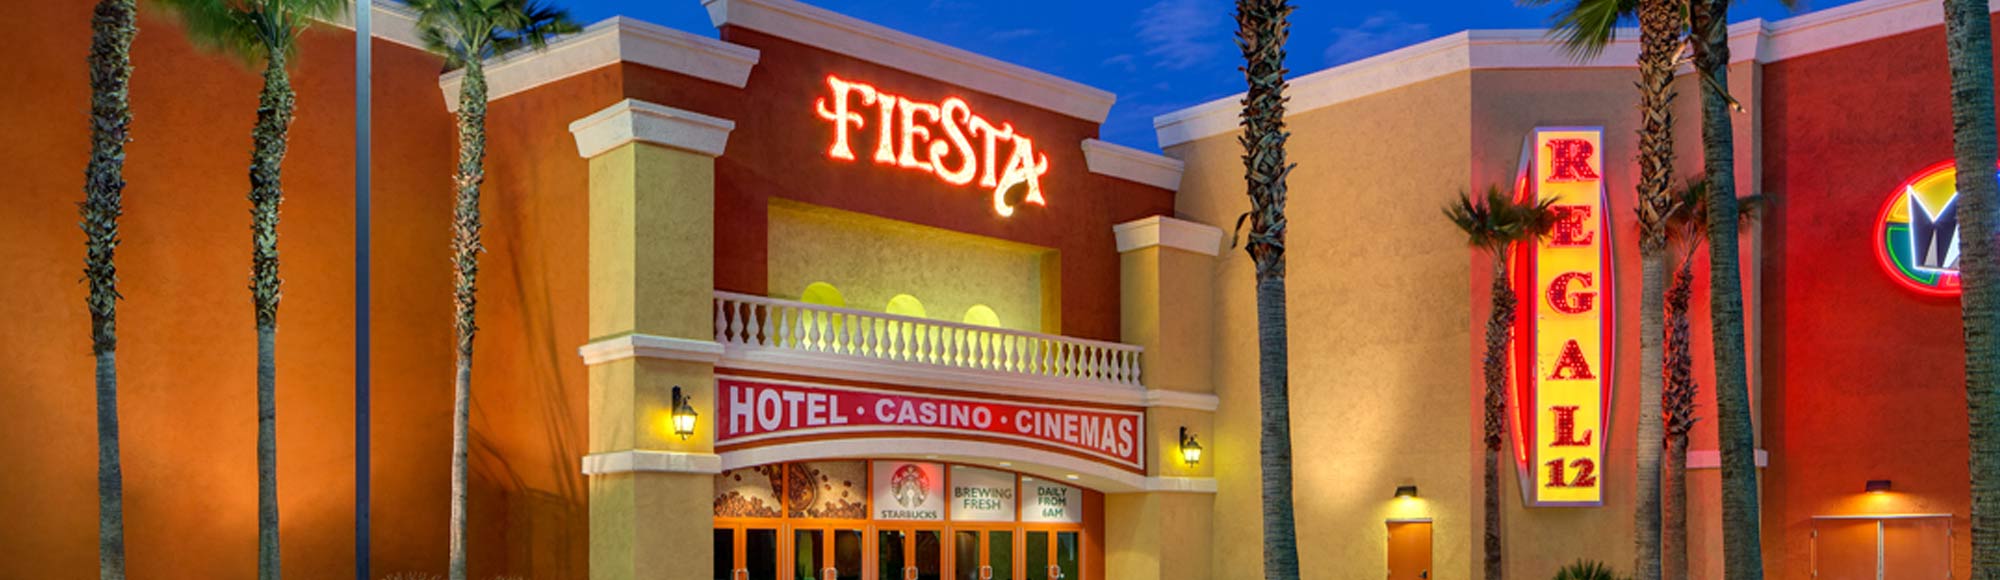 Fiesta Casino Theater Henderson